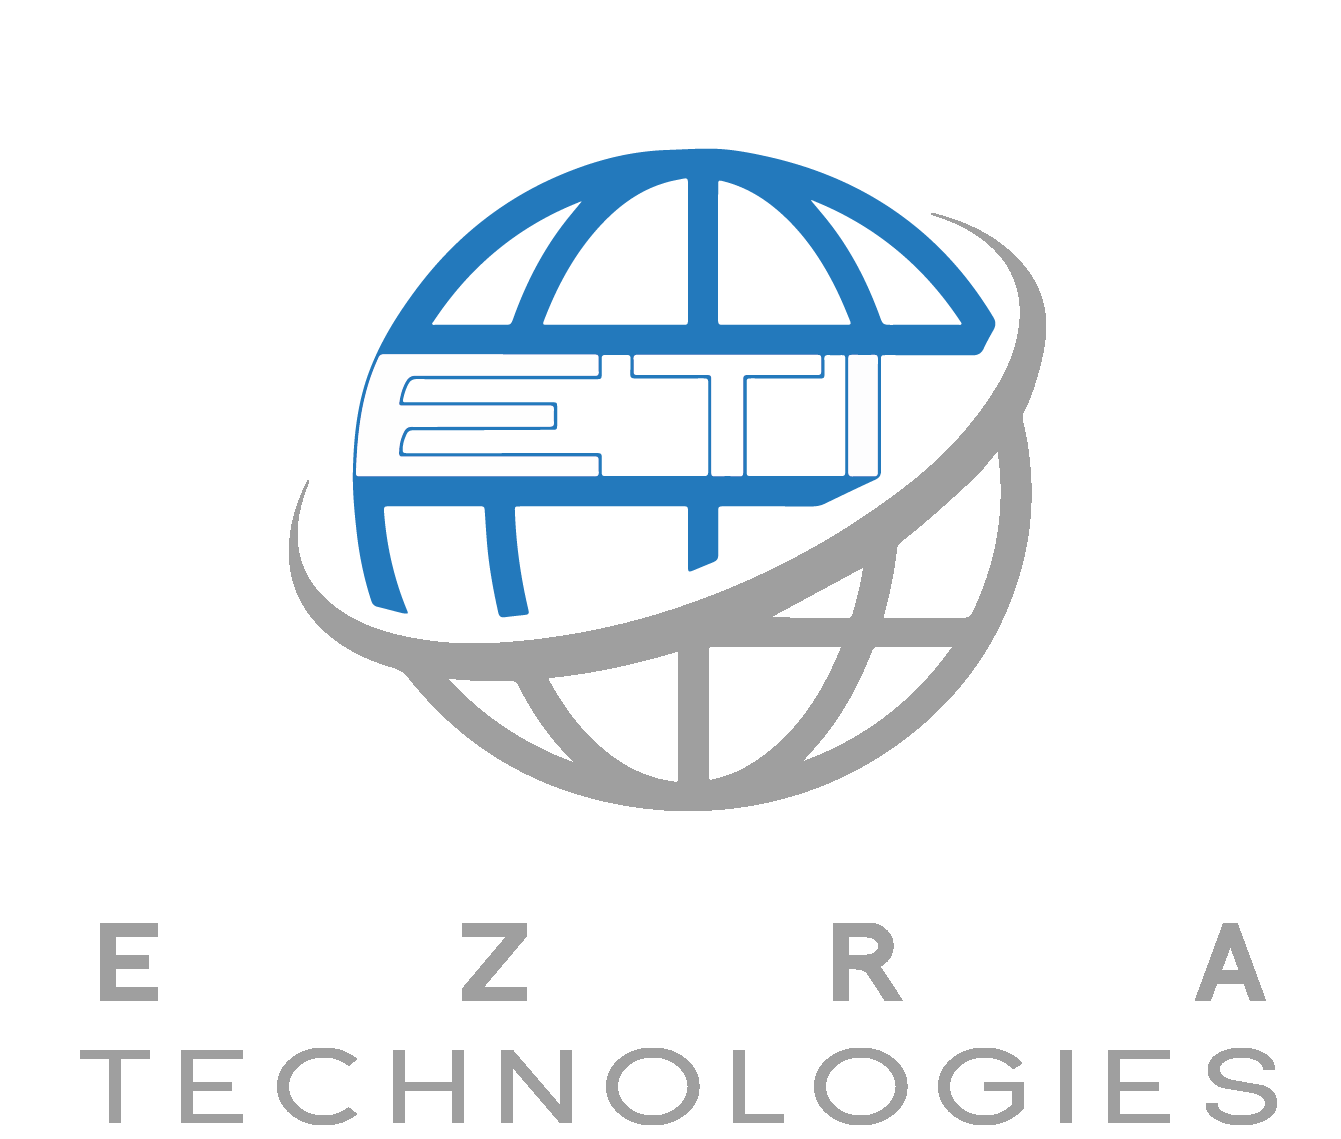 EZRA logo